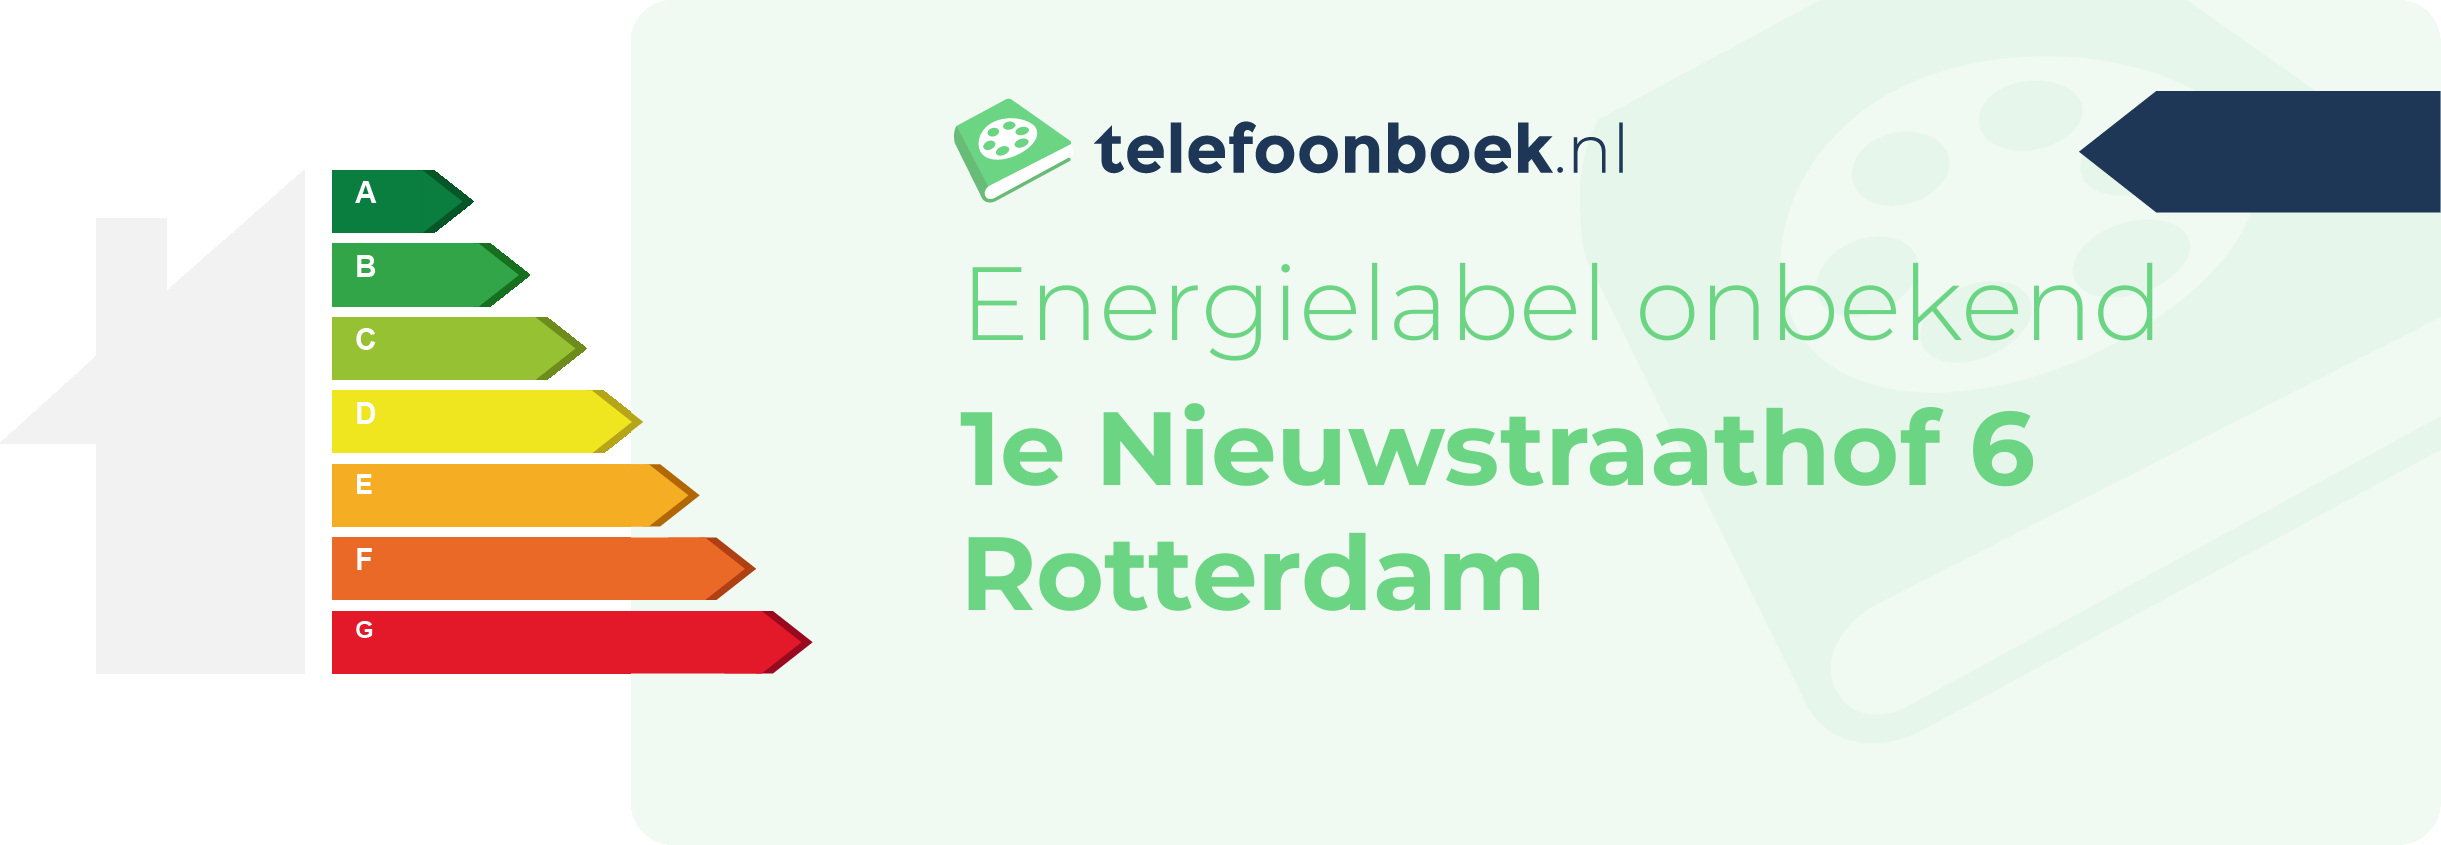 Energielabel 1e Nieuwstraathof 6 Rotterdam